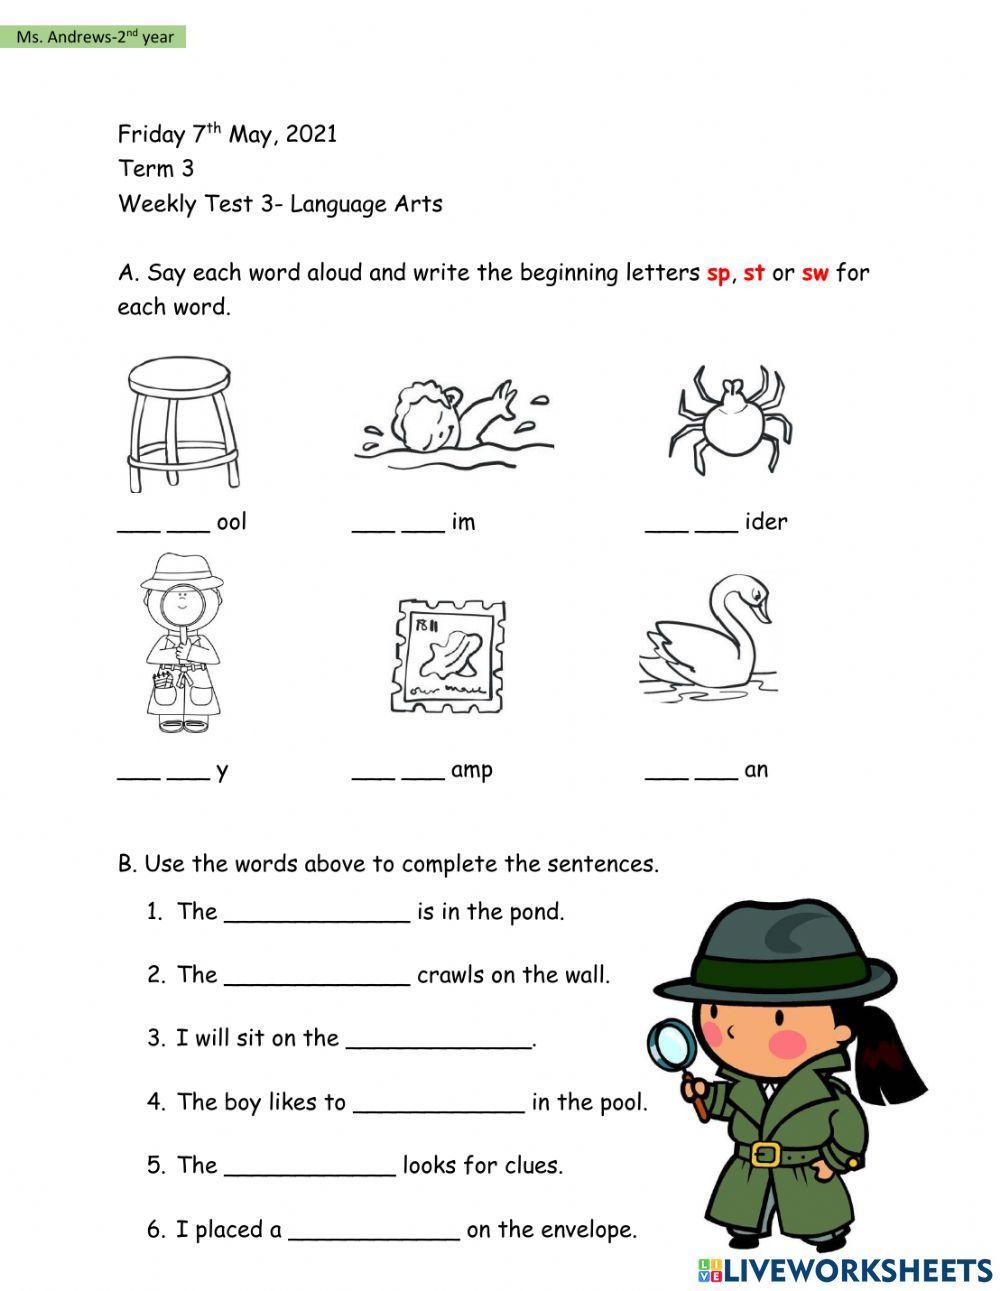 Term 3 Weekly Test 3- Language Arts